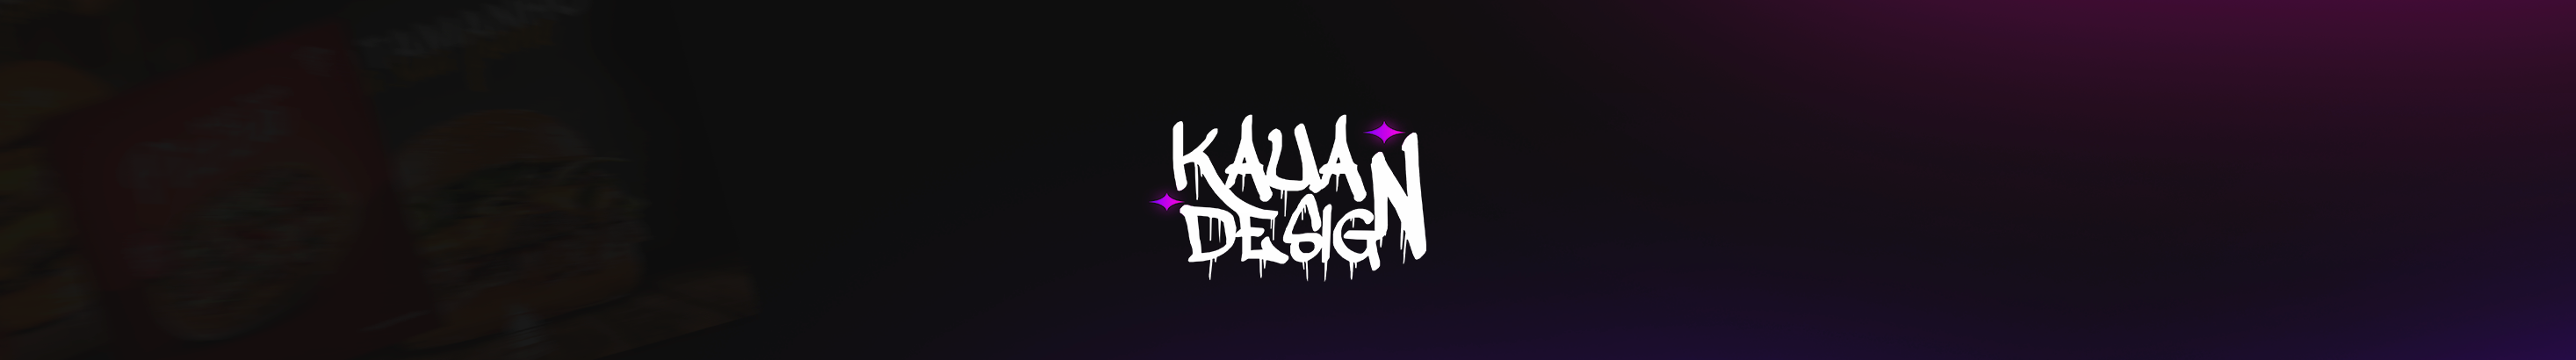 Kauan Design's profile banner